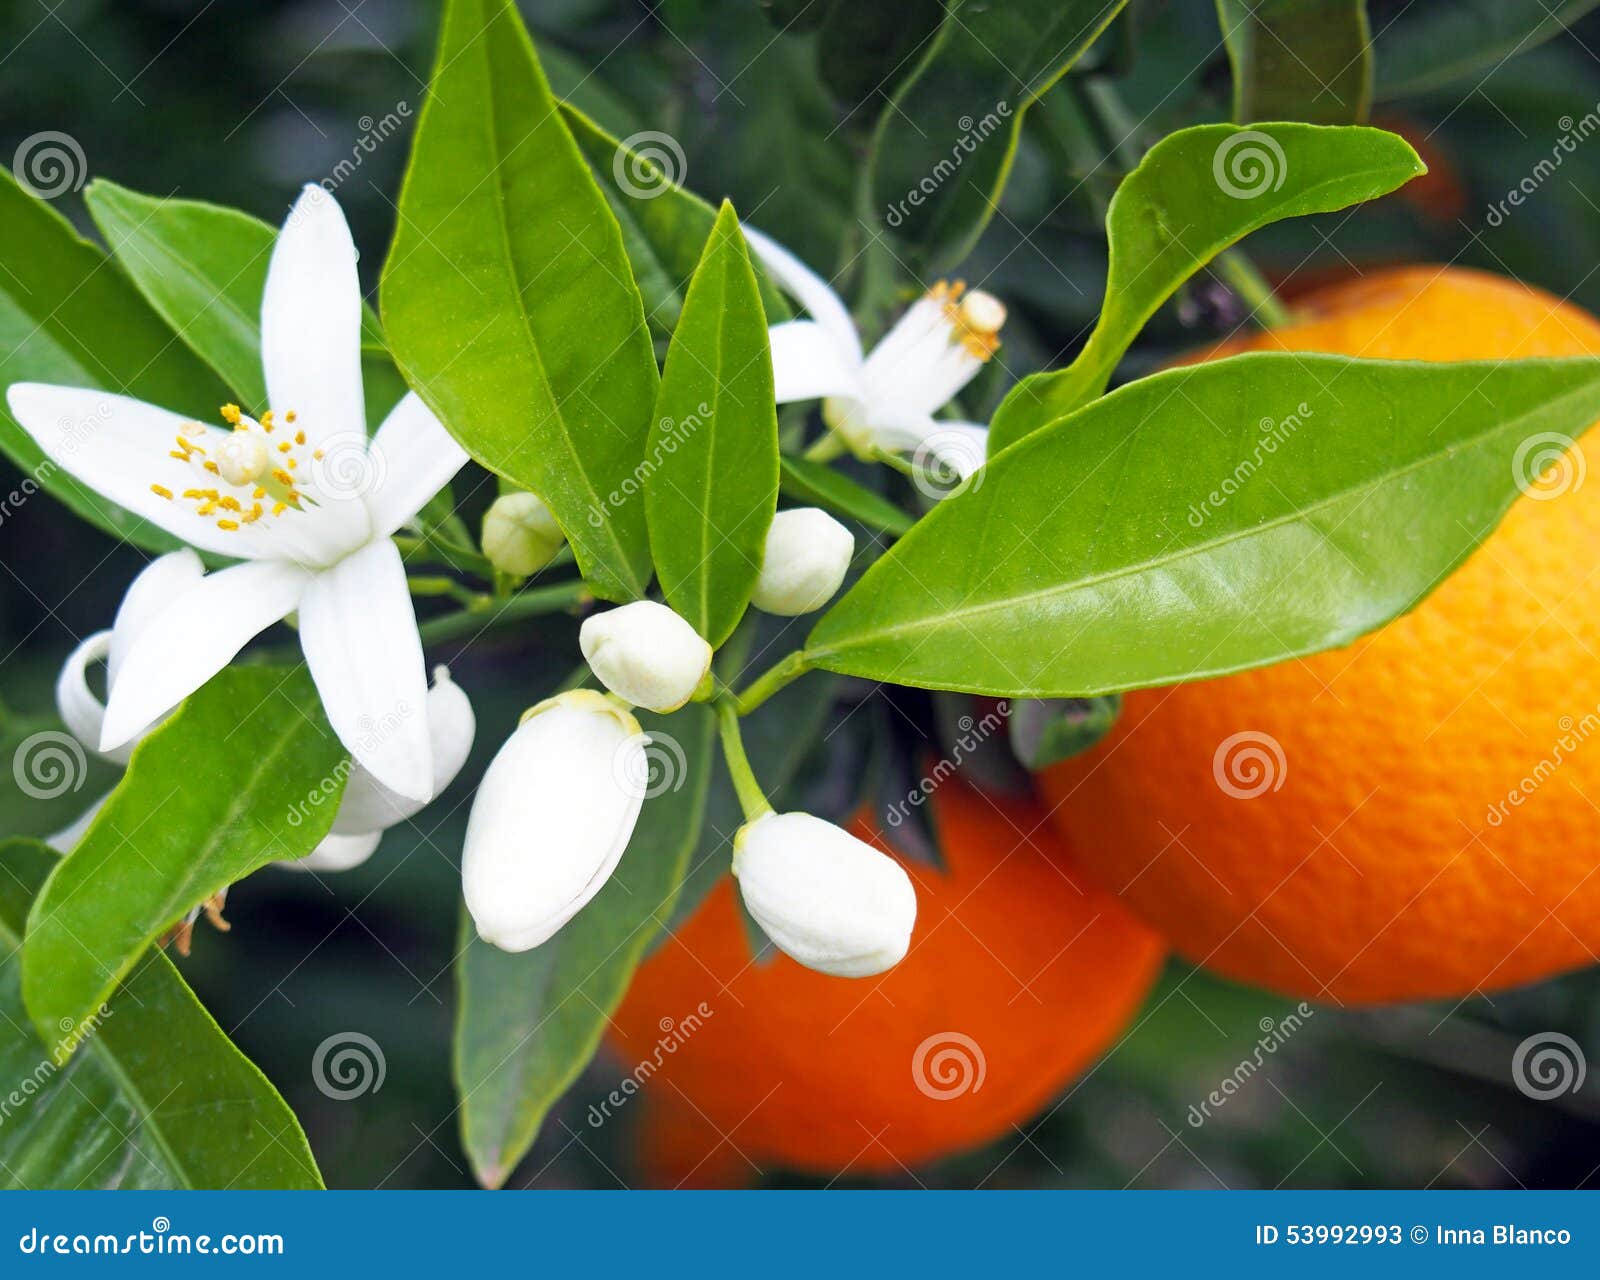 valencian orange and orange blossoms, spain